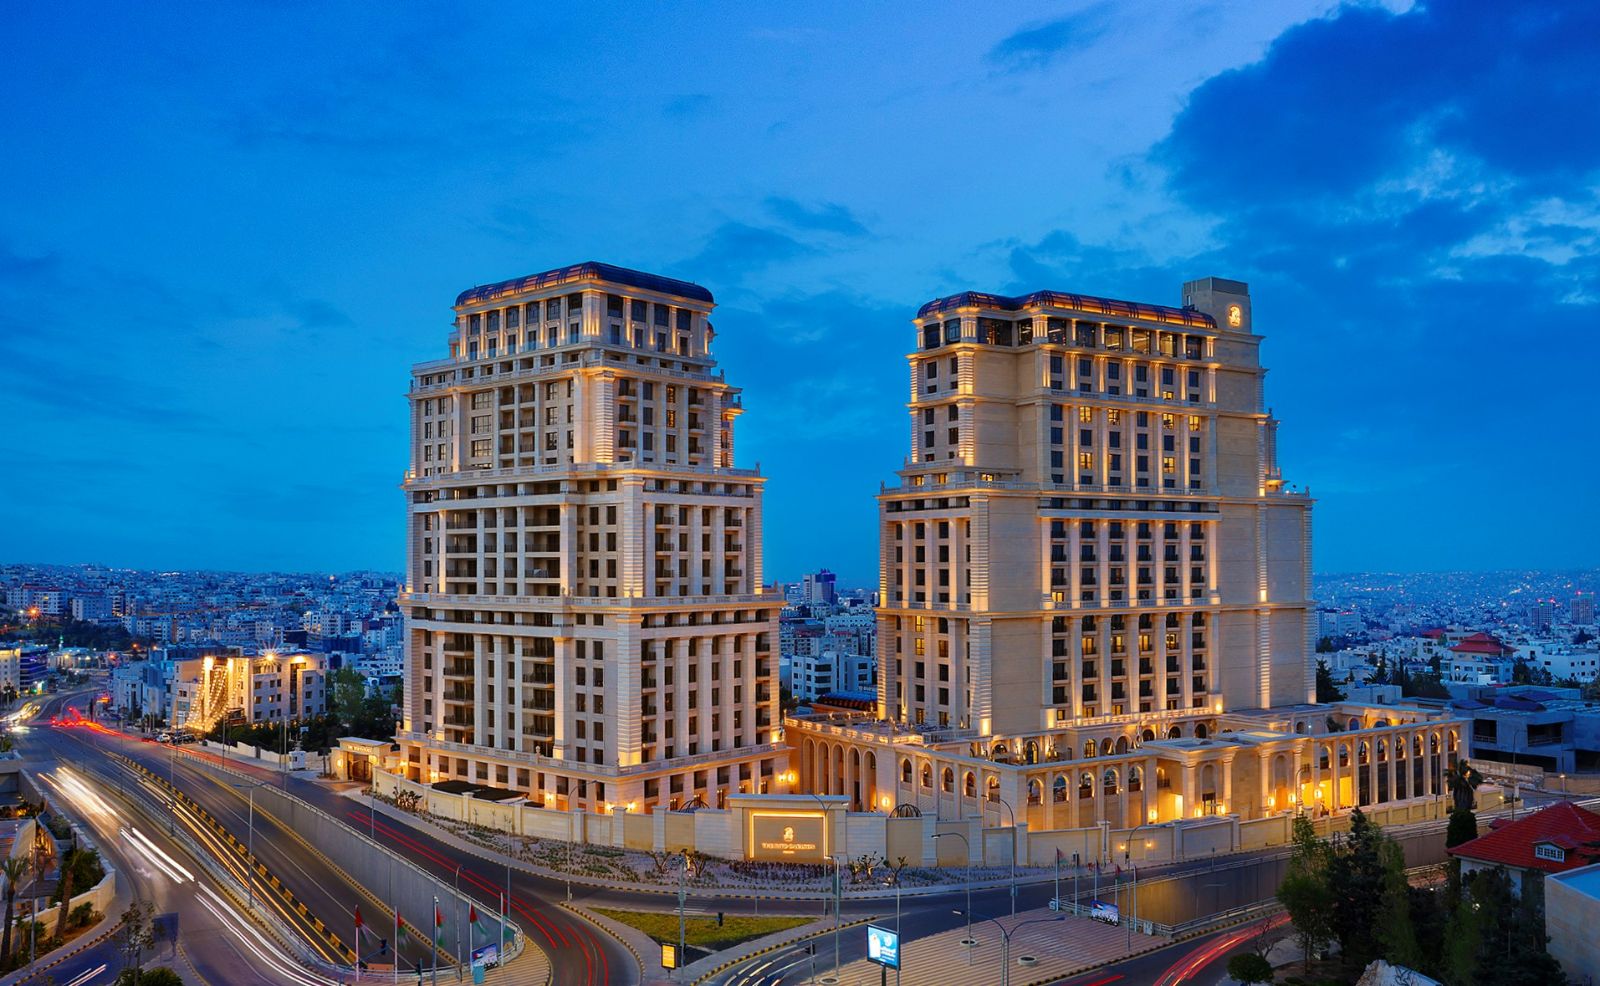 Aerial view of the Ritz Carlton Amman in Jordan